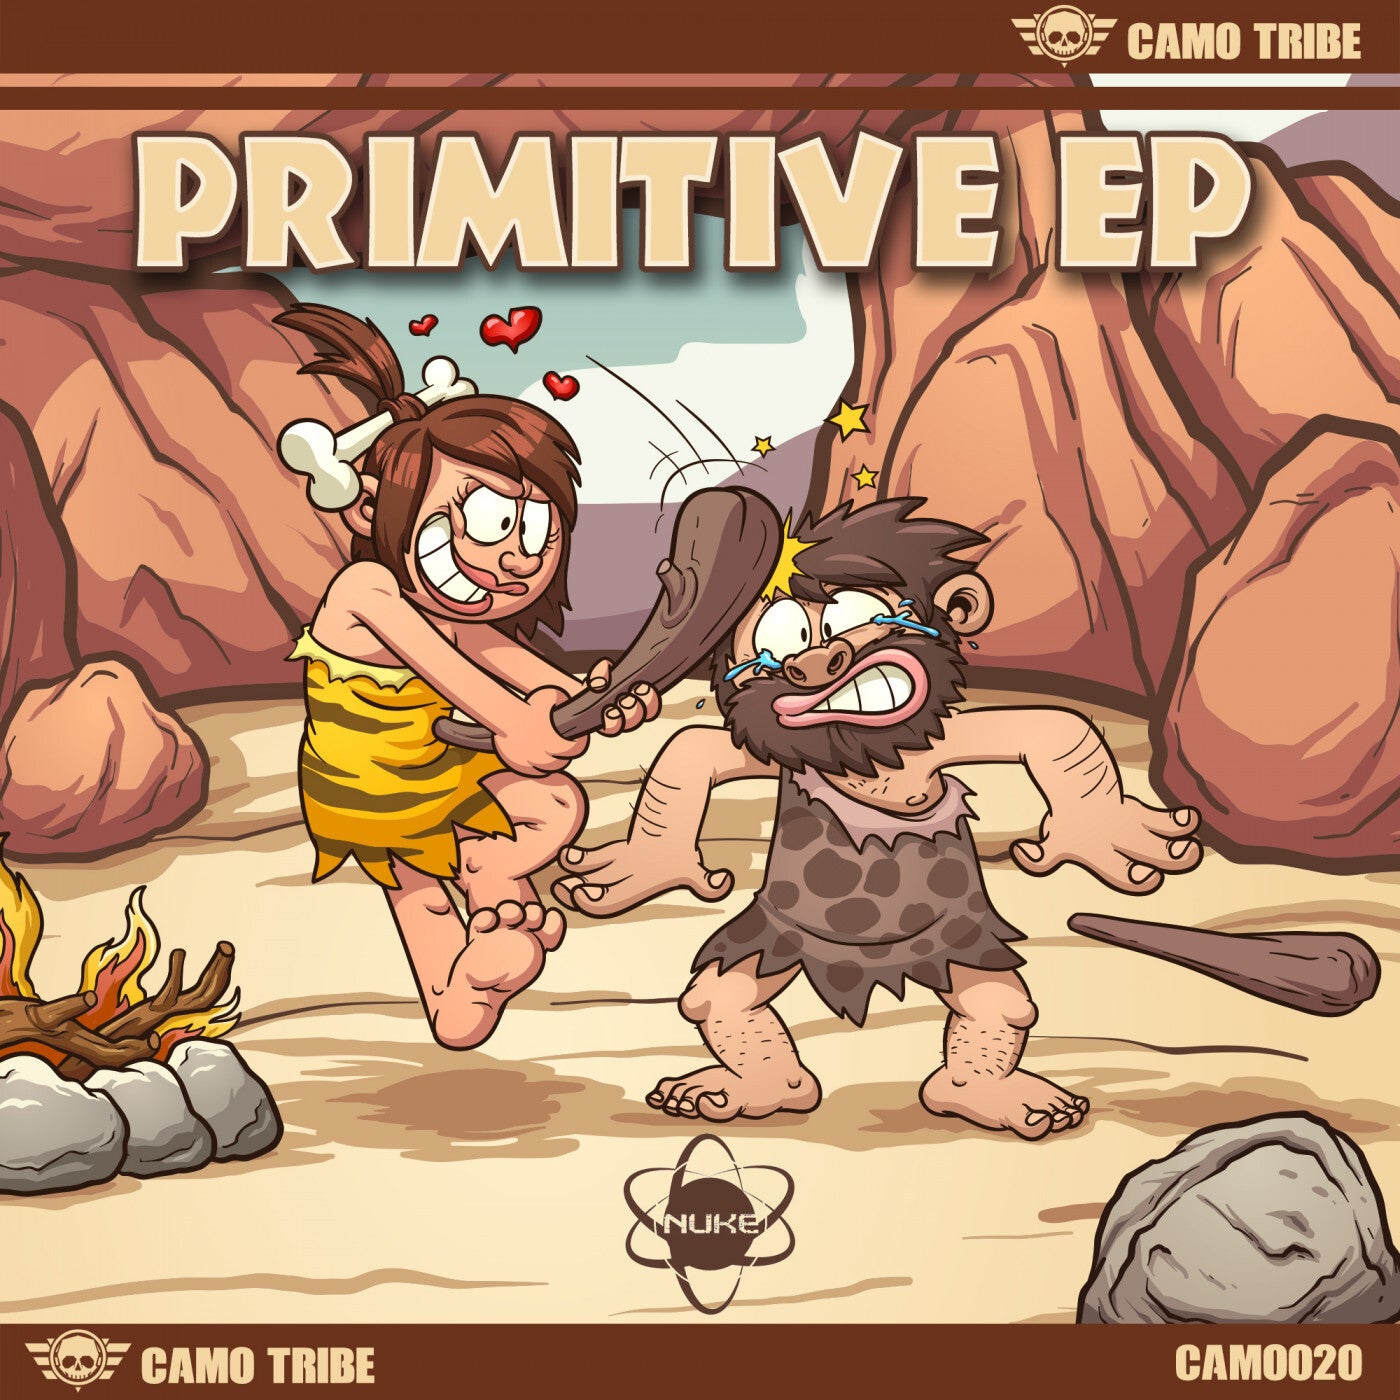 Primitive EP